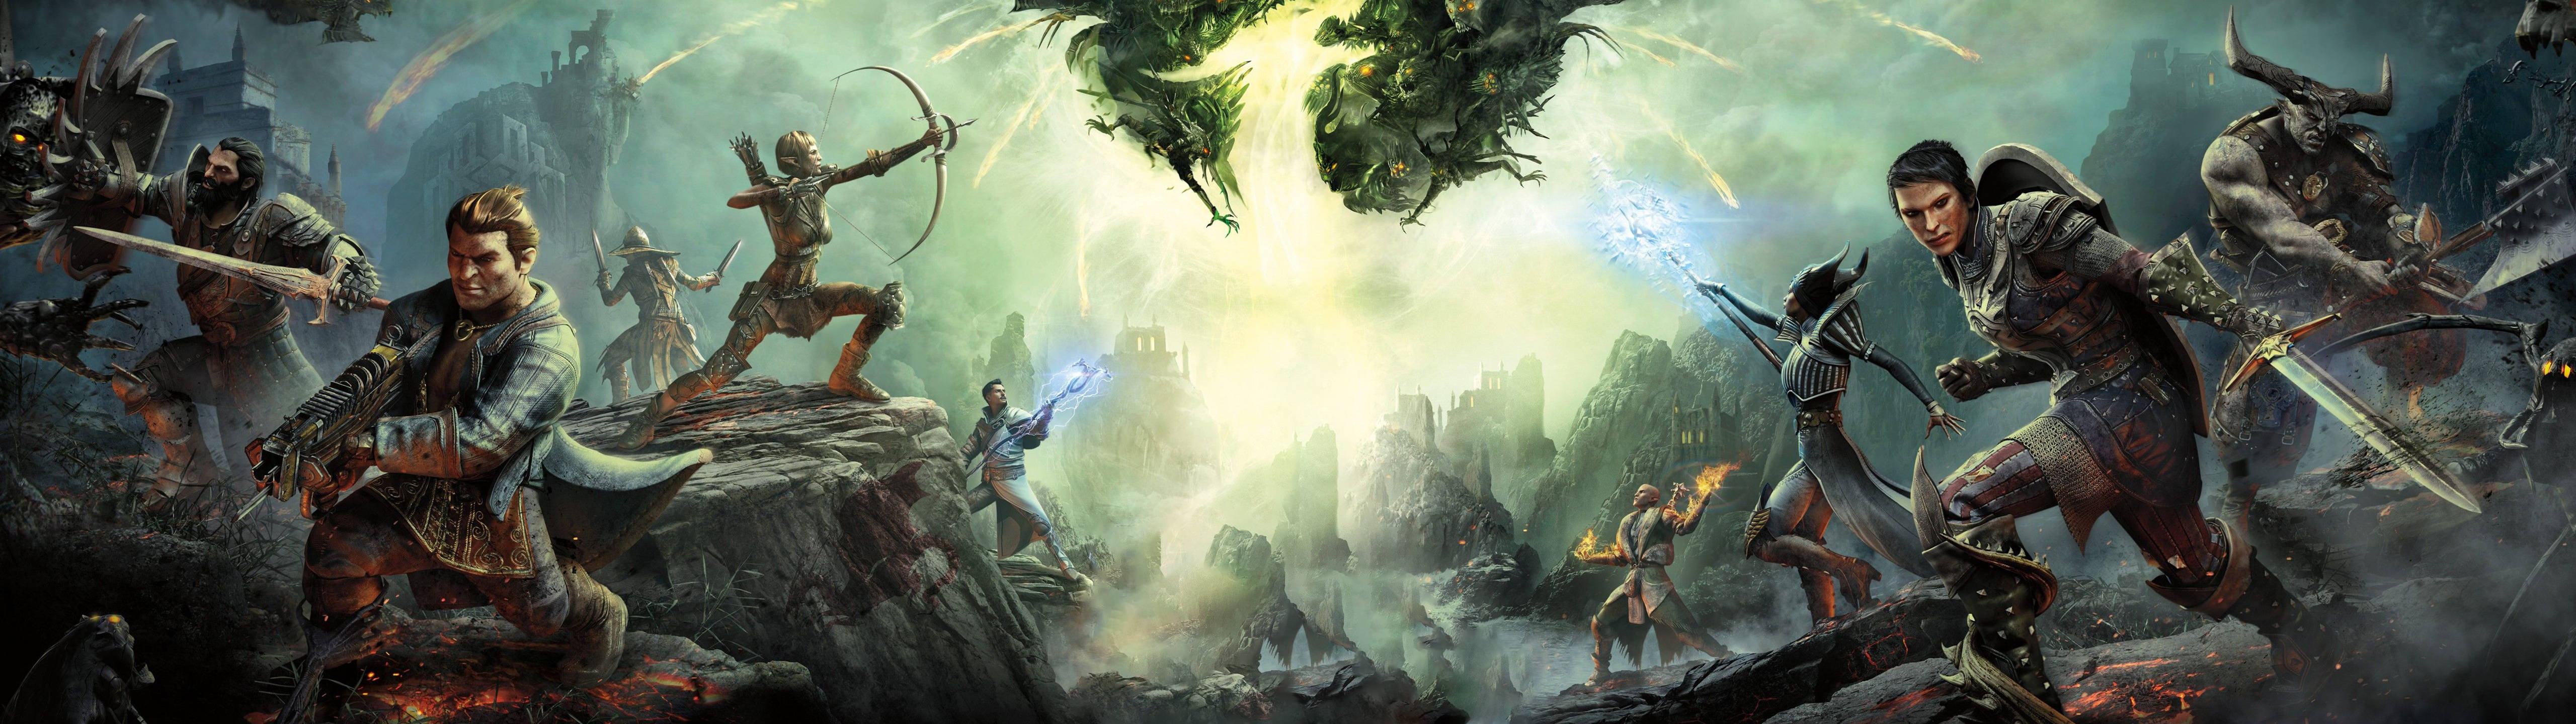 5120x1440 Game Dragon Age Inquisition Wallpaper